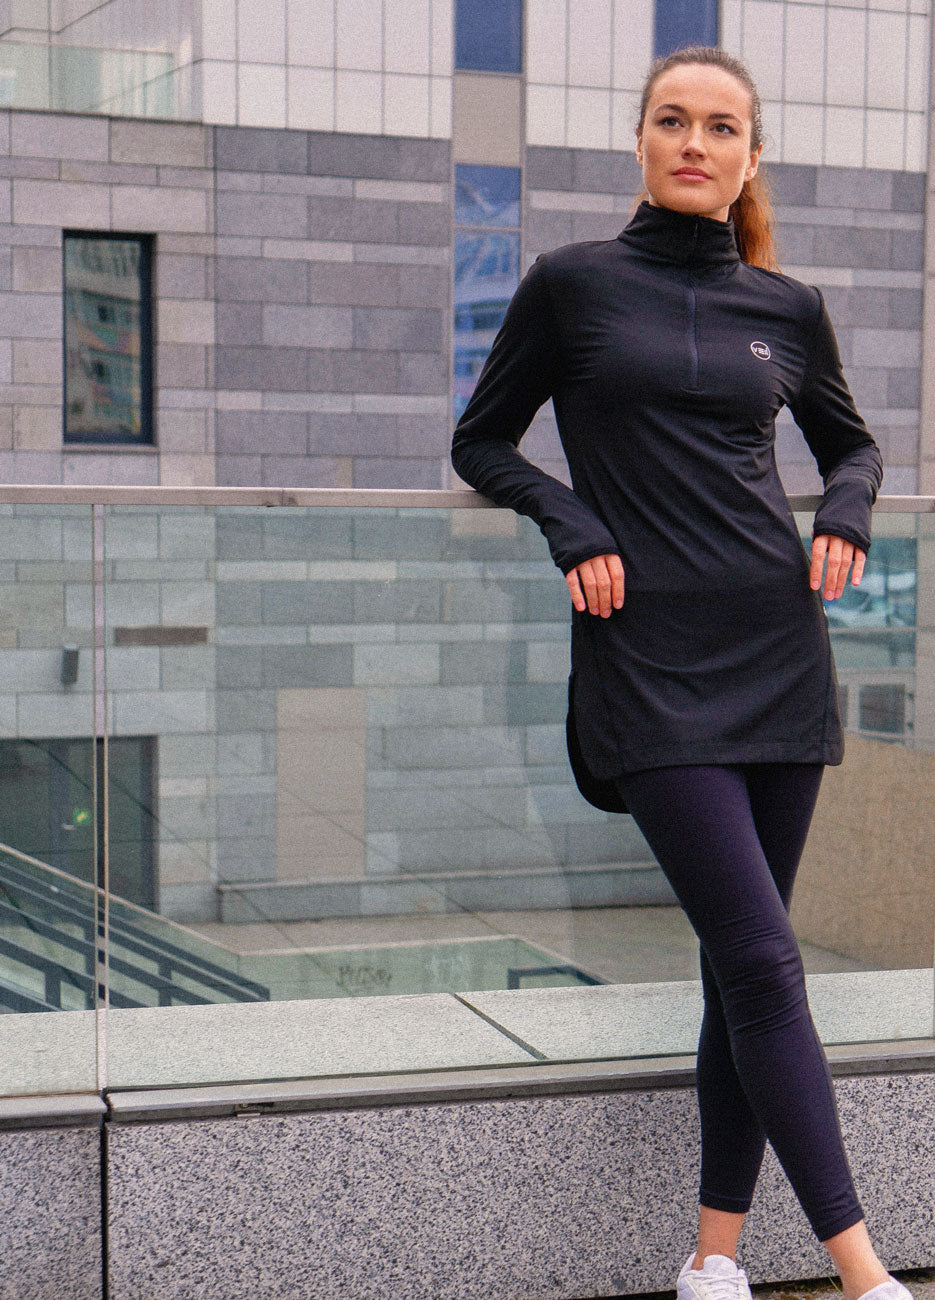 A female wearing a Veil Garments Black Spark Half-Zip, modest activewear, in an outdoor setting.